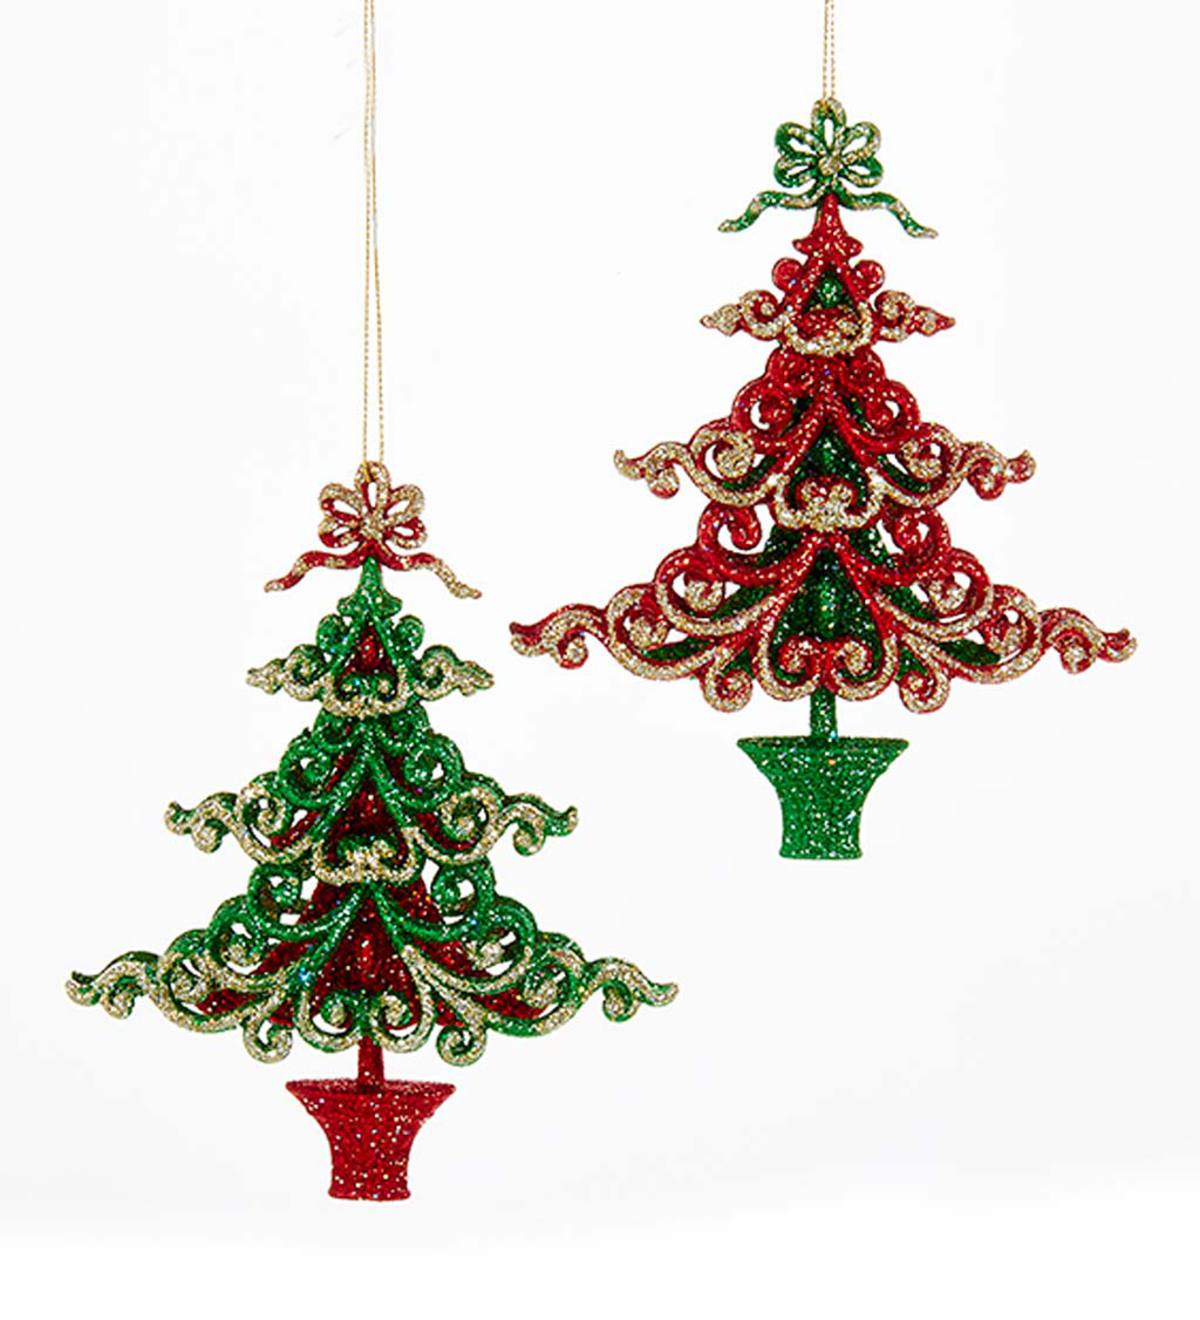 Christmas Tree-Shaped Ornaments, Set of 2